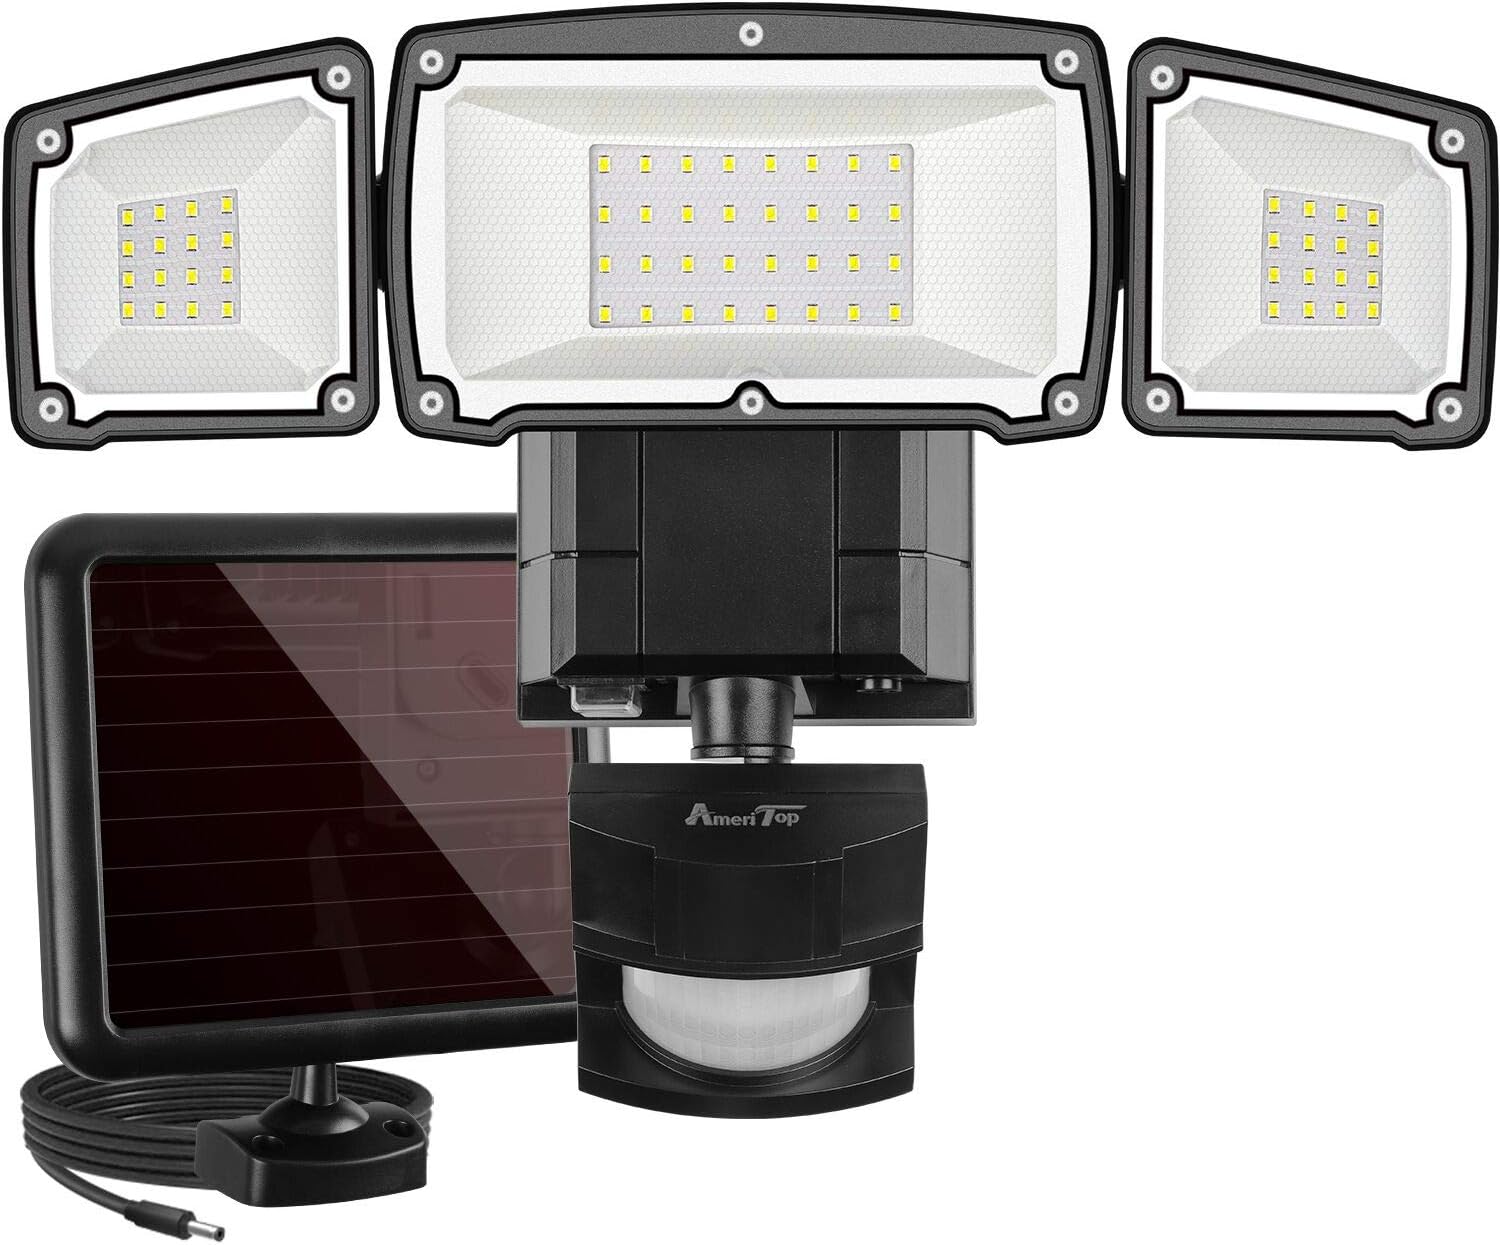 AmeriTop Solar Lights Outdoor,  Super Bright 1600LM LED 6000K Solar Motion Sensor Lights with Wide Angle Illumination; 3 Adjustable Head